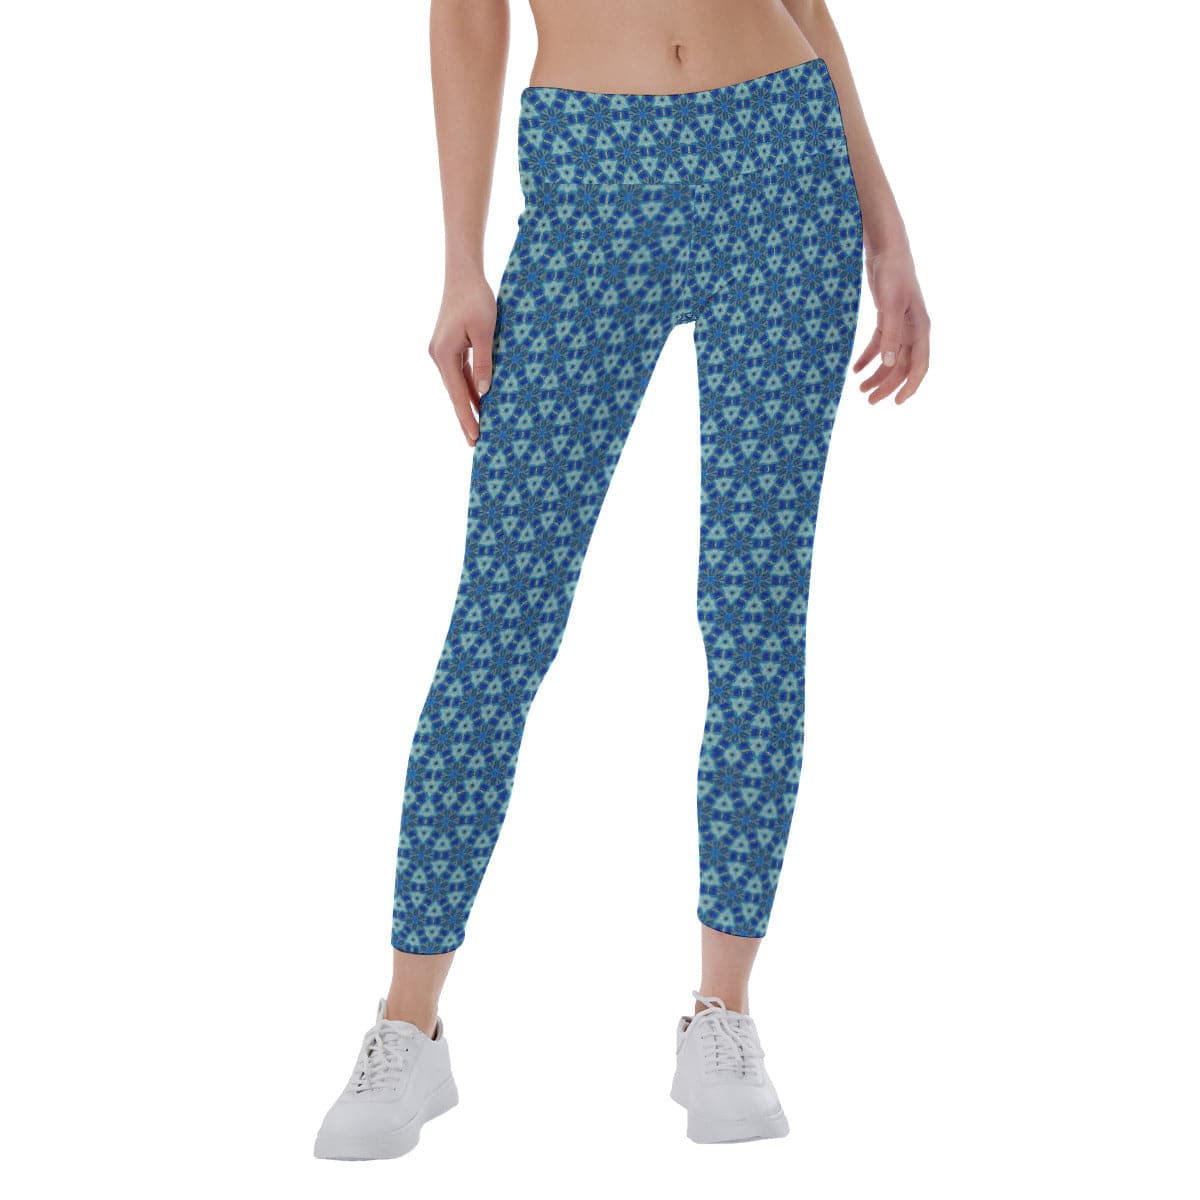 Blue Honeycomb patterned Women's Yoga Pants/Leggings, by Sensus Studio Design